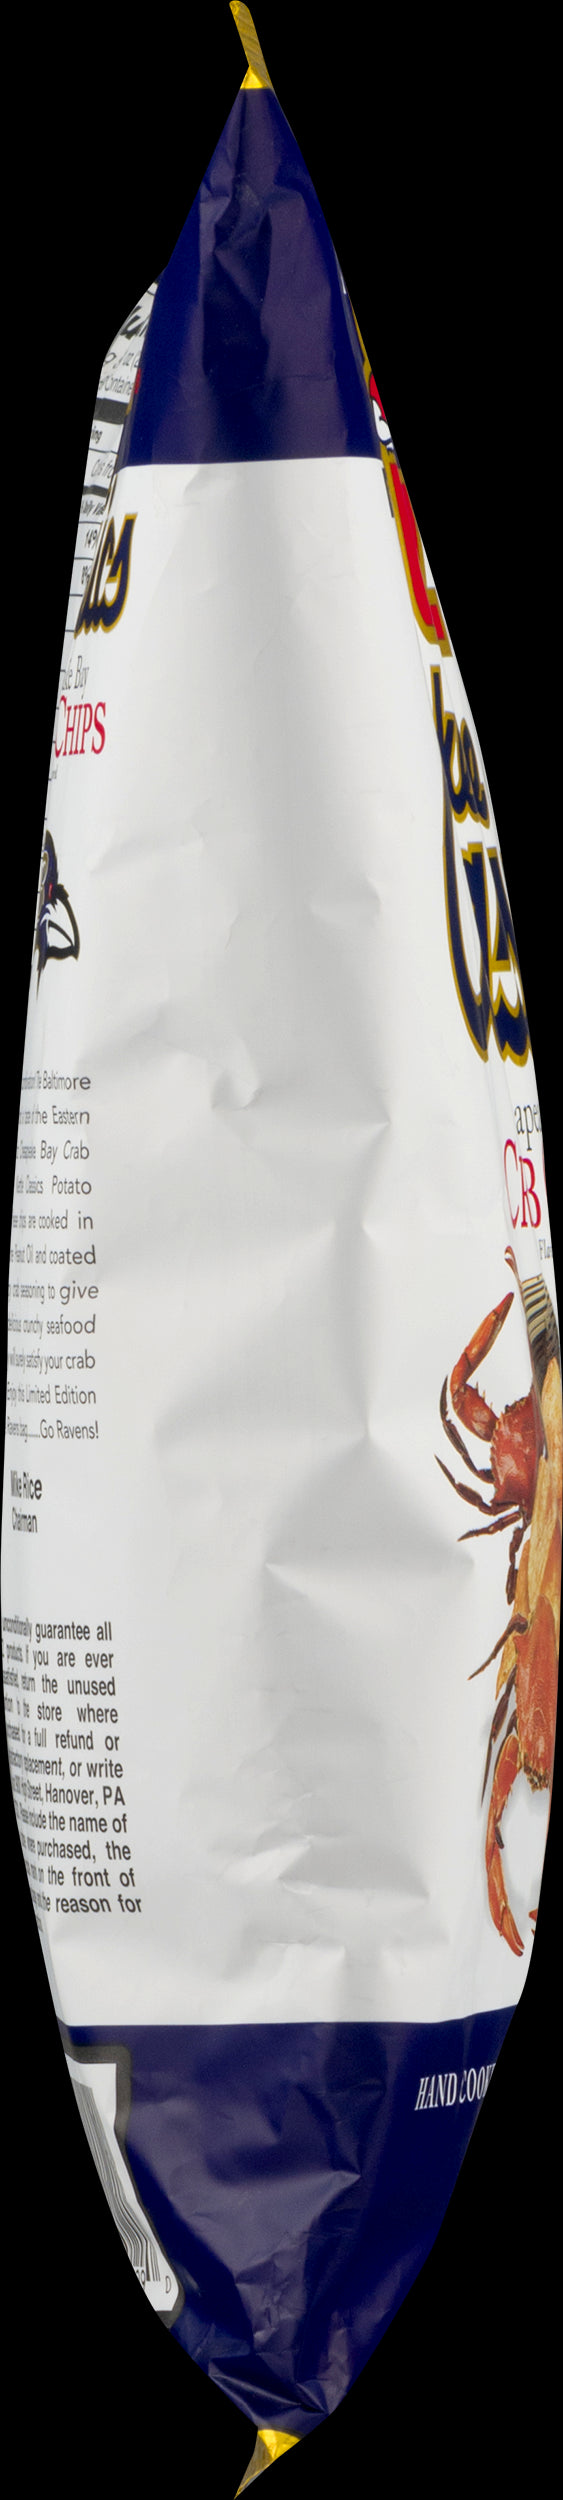 Utz Kettle Classics Chesepeake Bay Crab Potato Chips 8 oz. Bag (3 Bags)